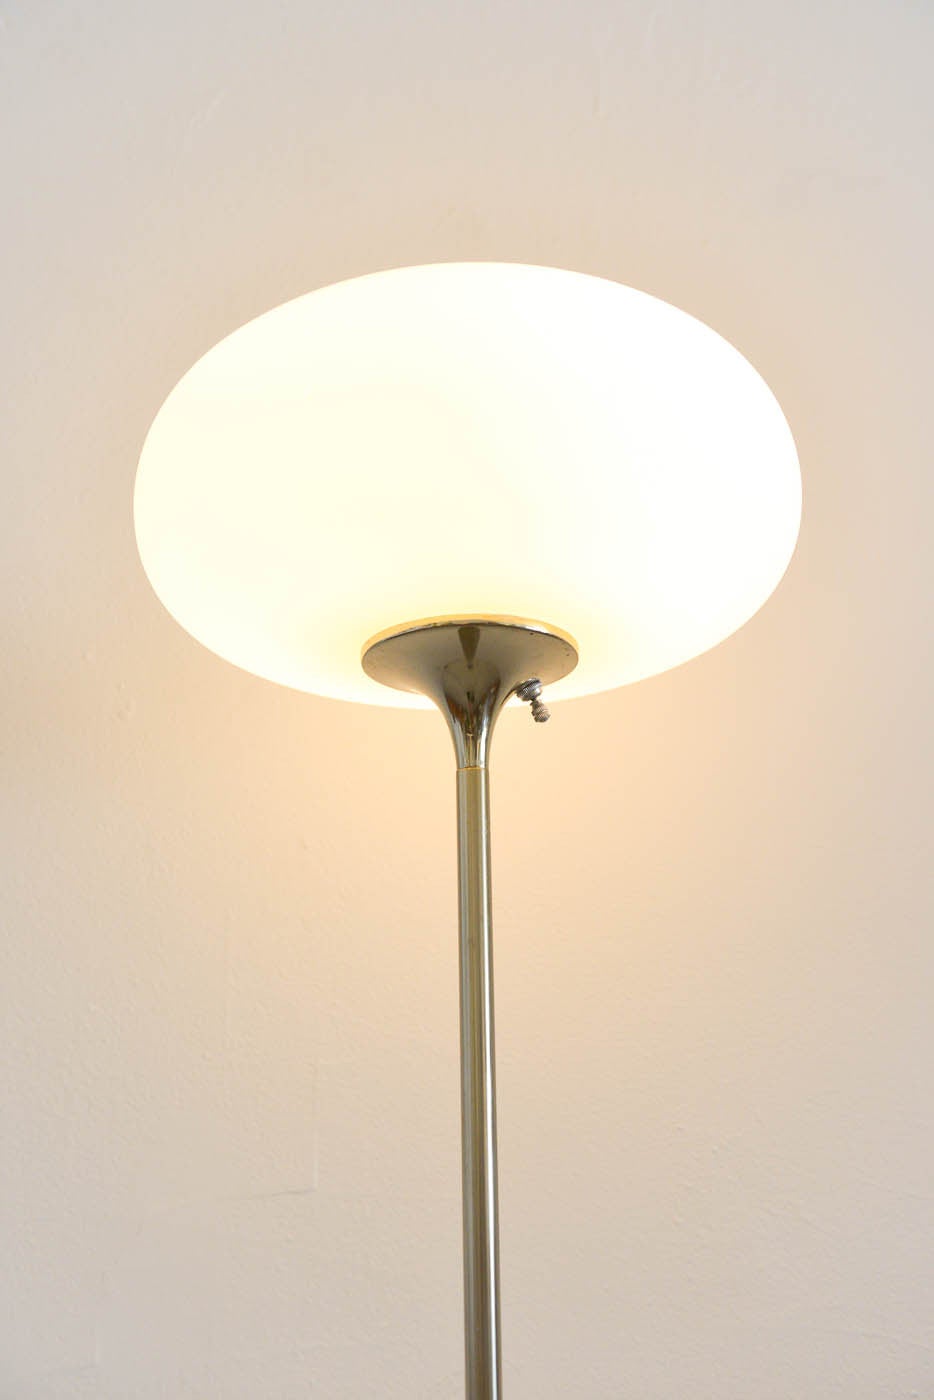 standing mushroom lamp